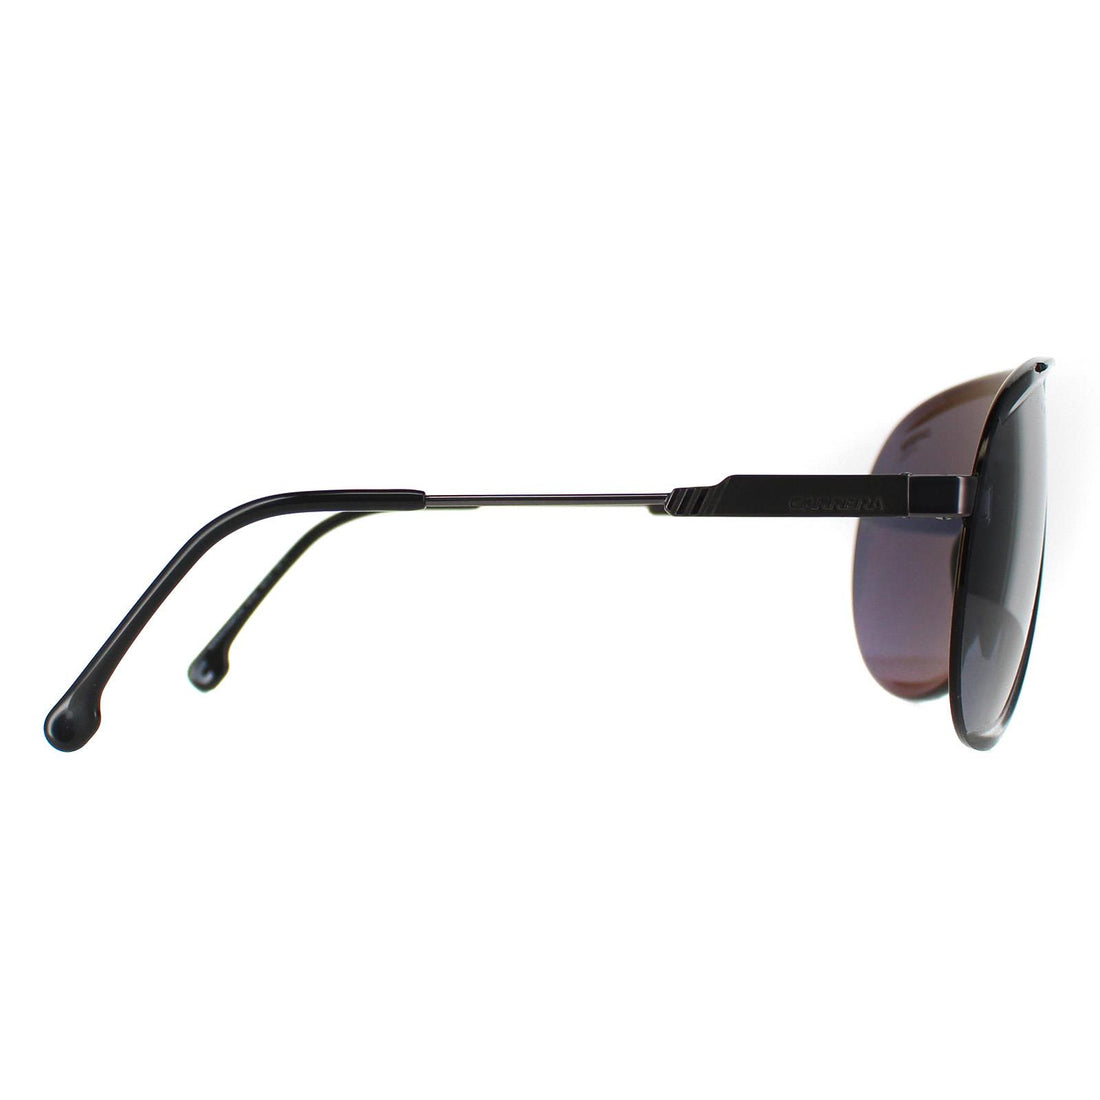 Carrera Sunglasses SuperChampion V81 2K Dark Ruthenium Black Grey Antireflex